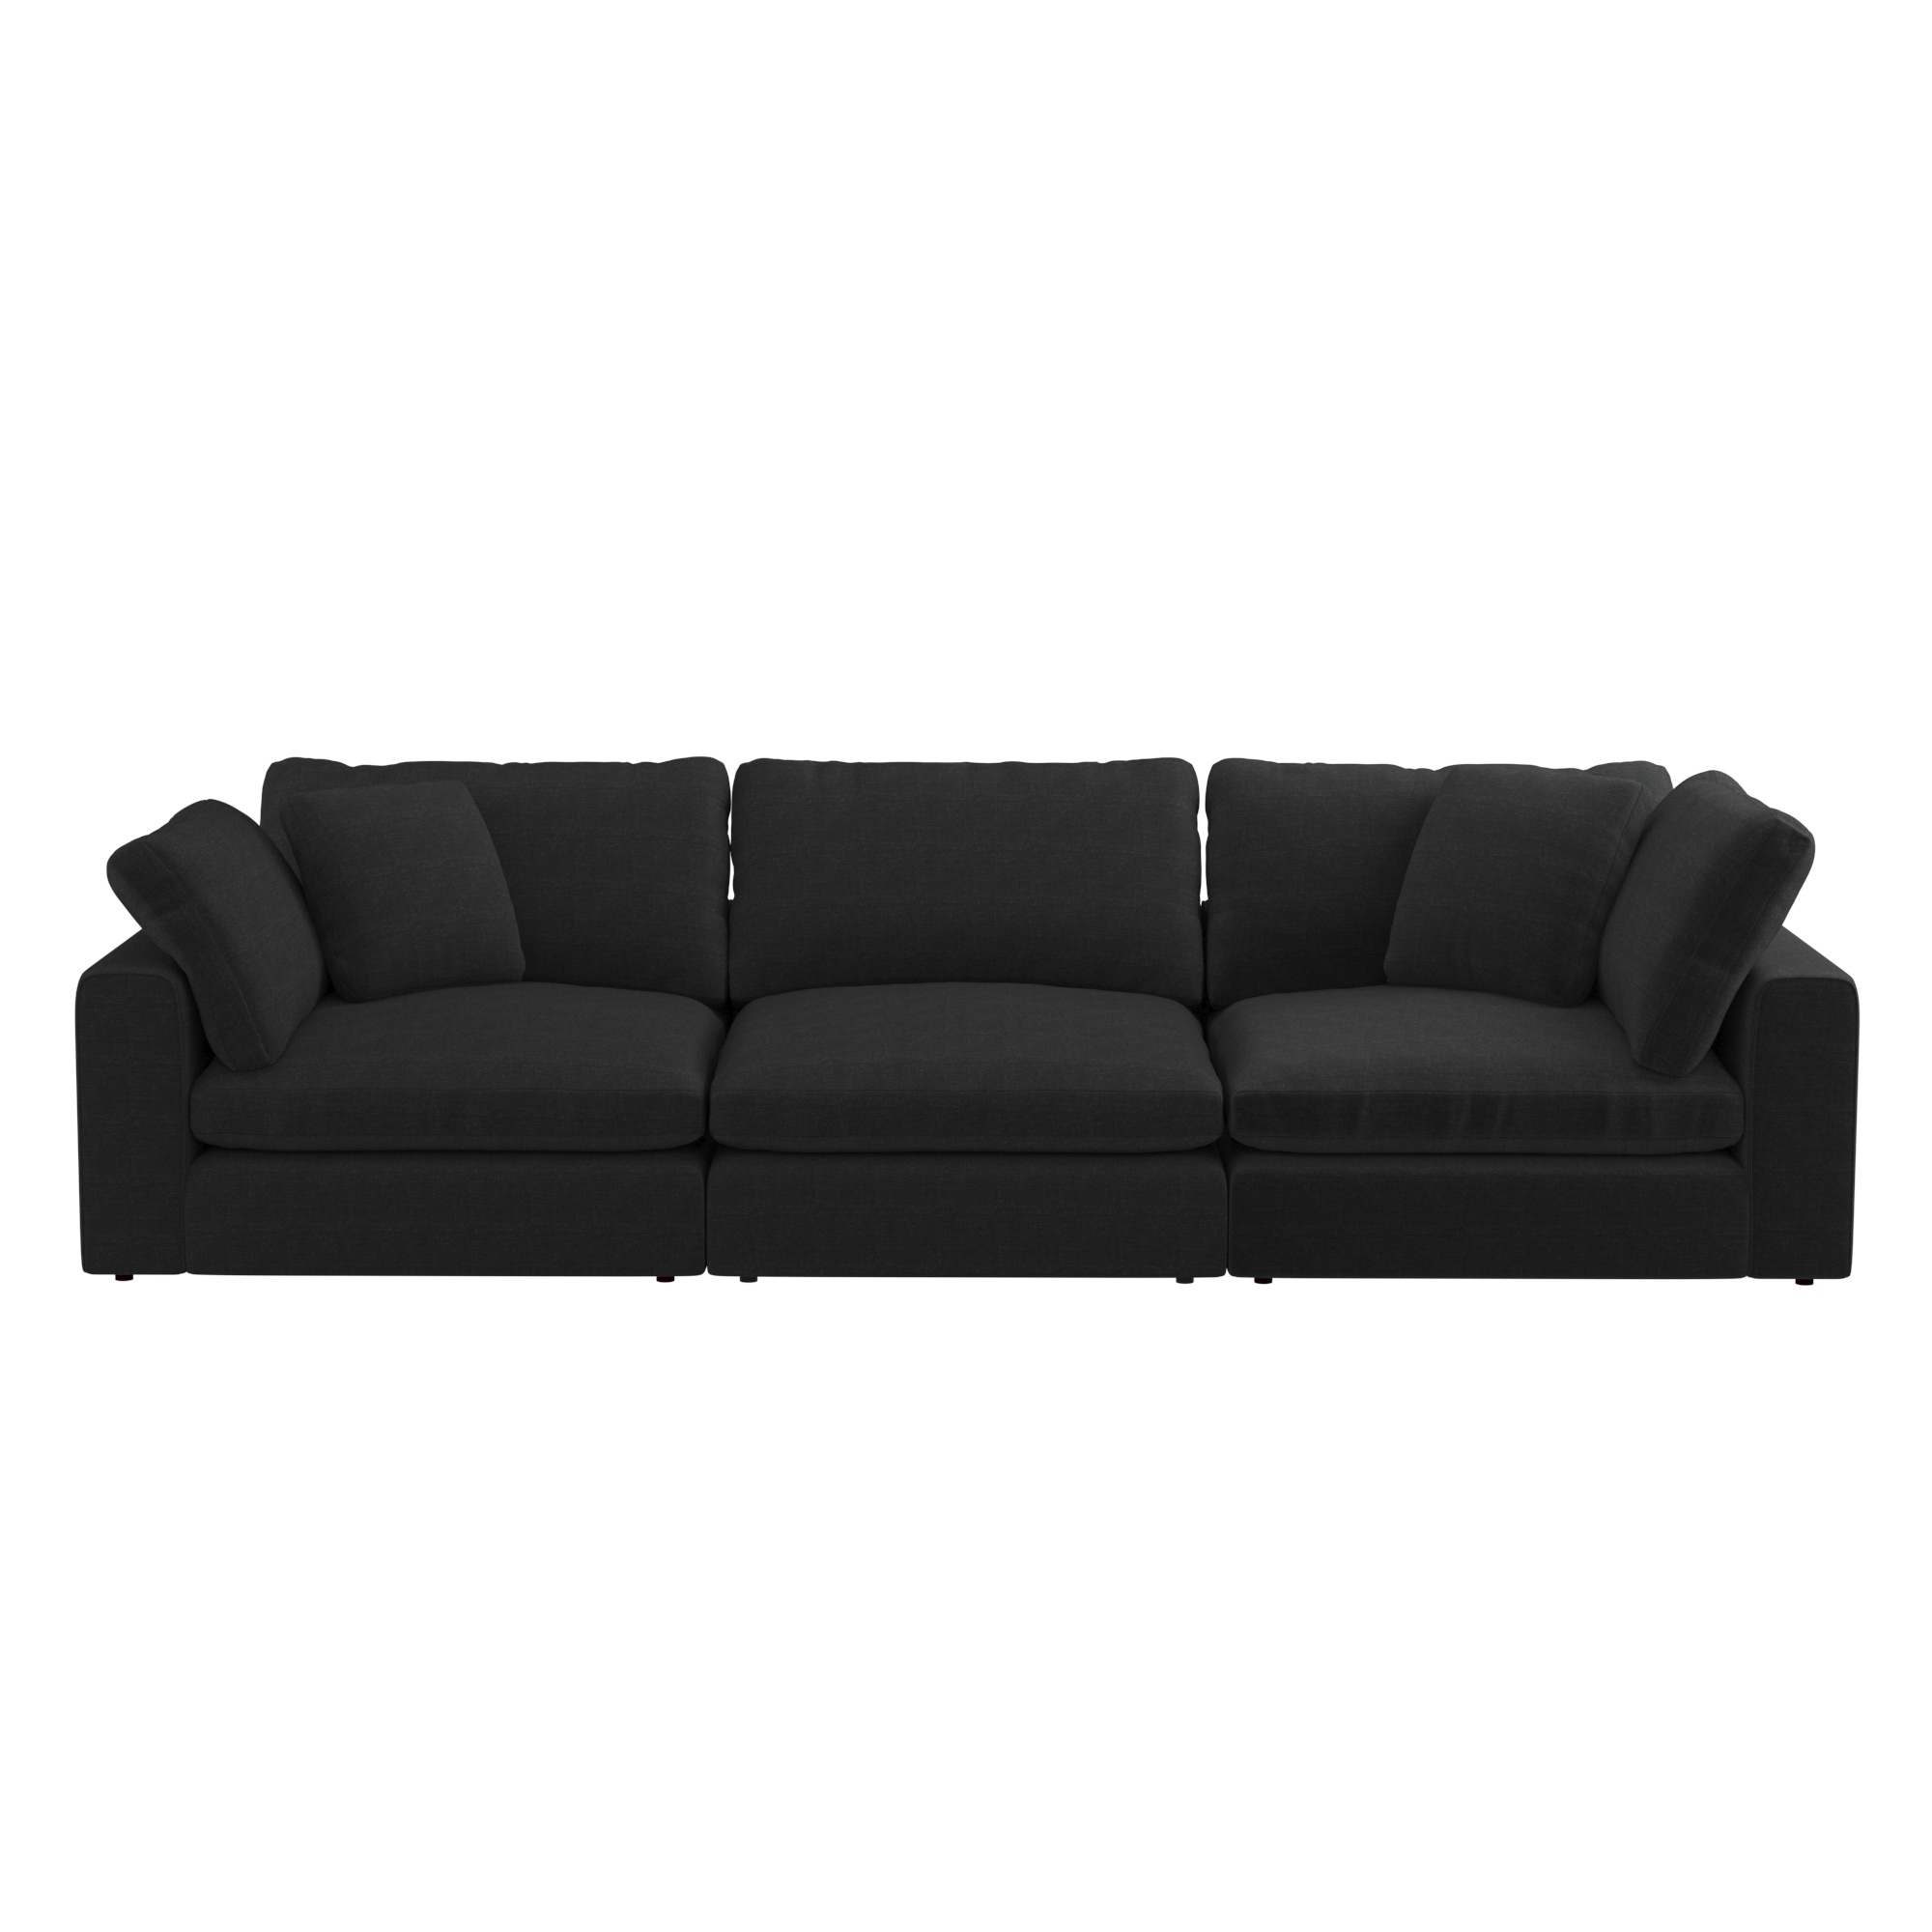 Artenis 3 Seater Sofa, Black Fabric | Barker & Stonehouse